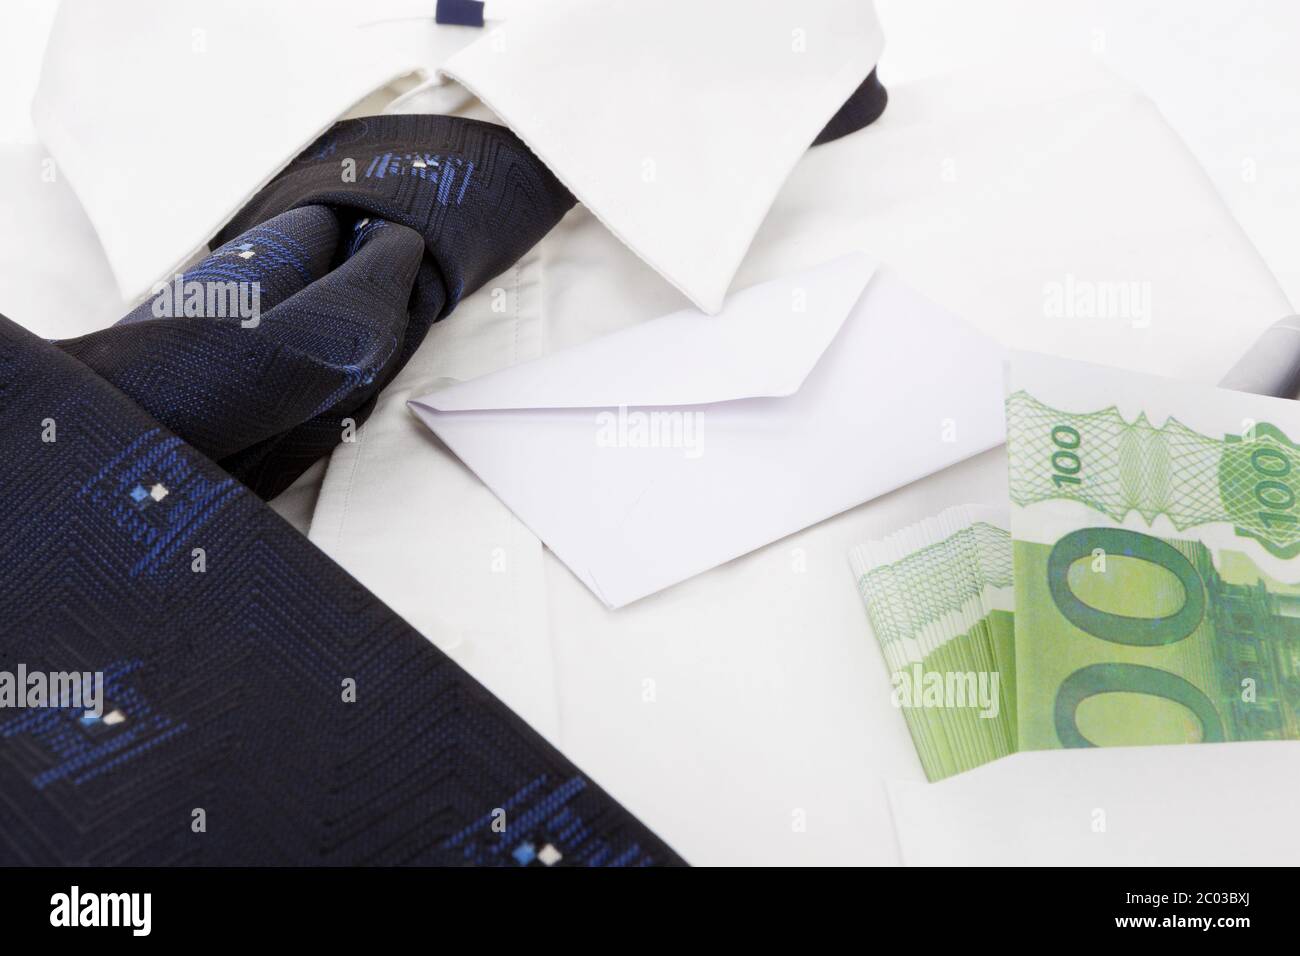 Dress shirt, envelope and money. Business still life. Stock Photo